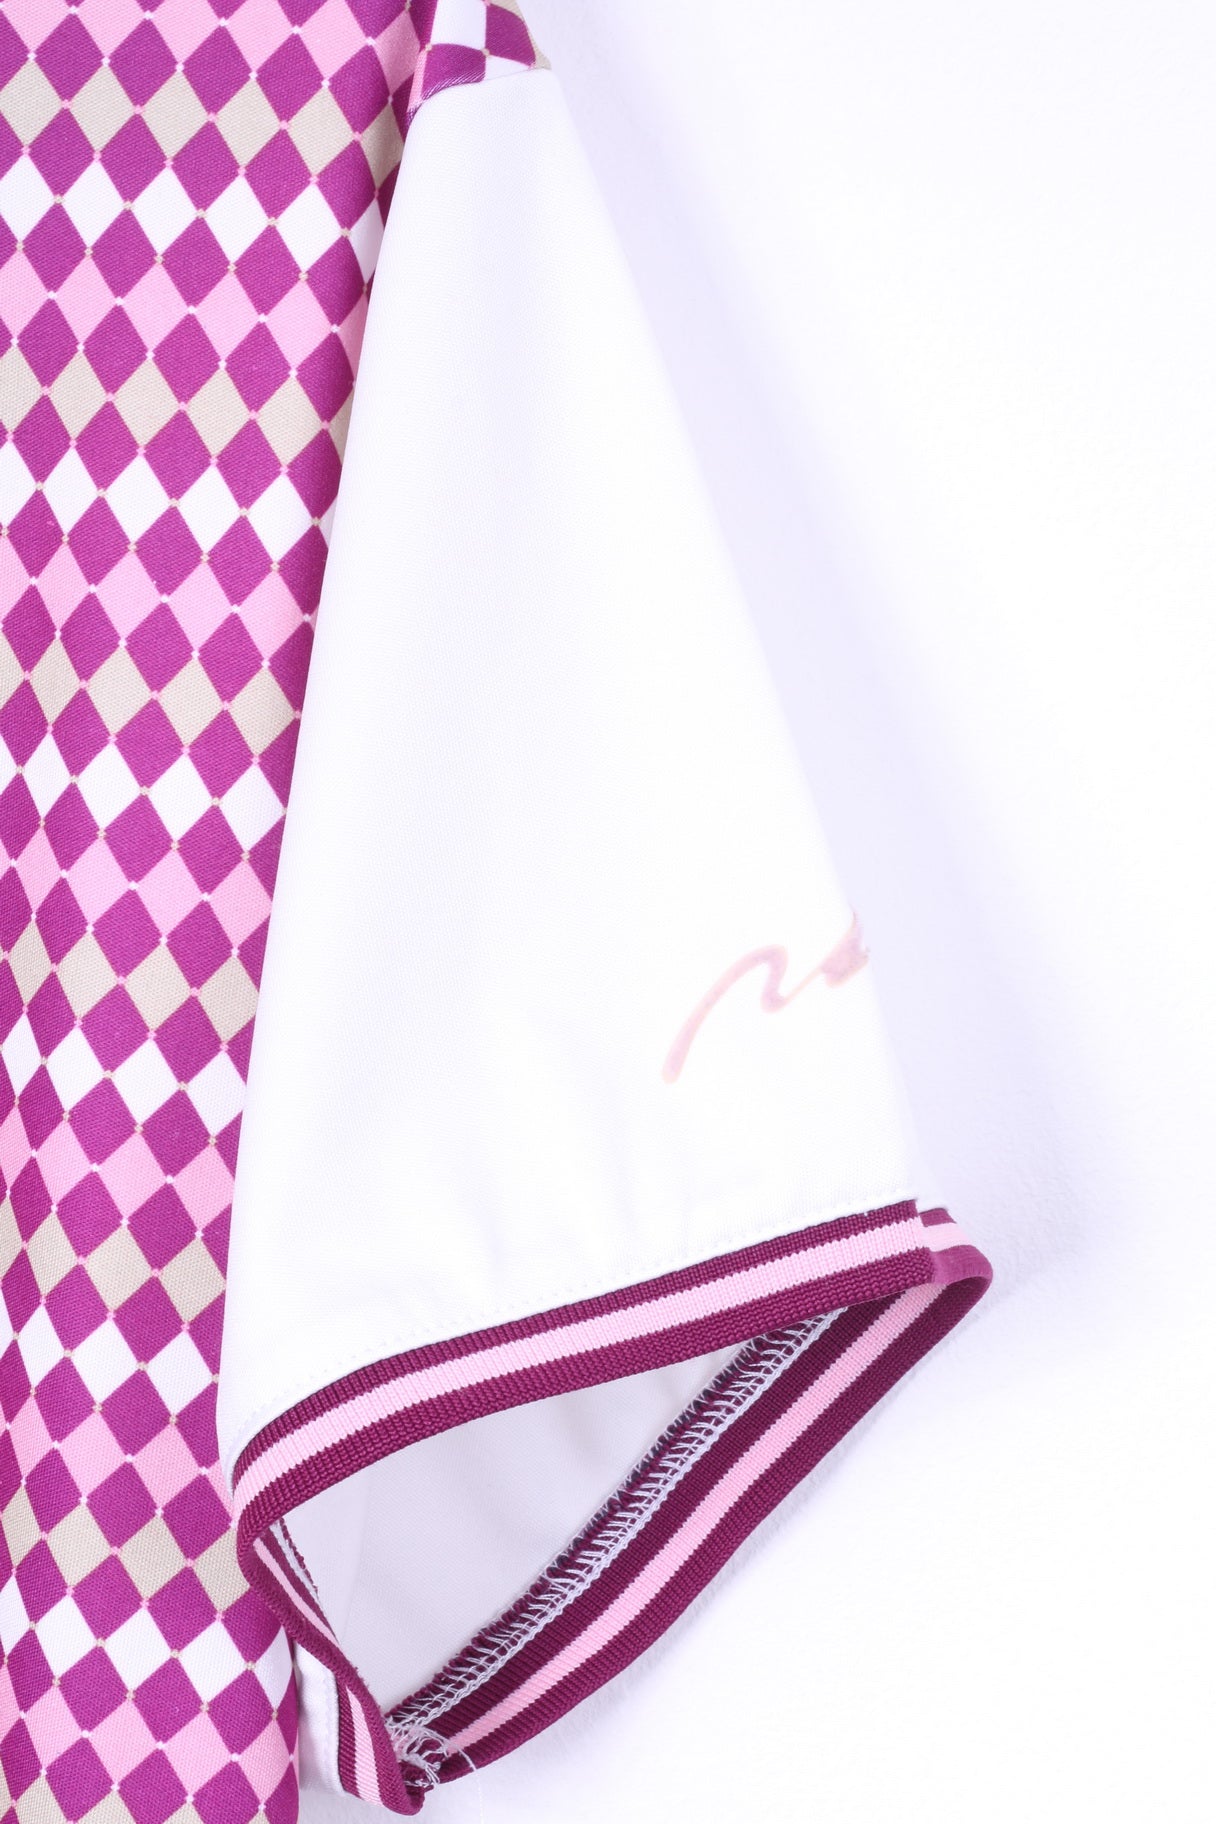 Pin High Womens 3XL (XL) Polo Shirt White Purple Diamonds Golf Top